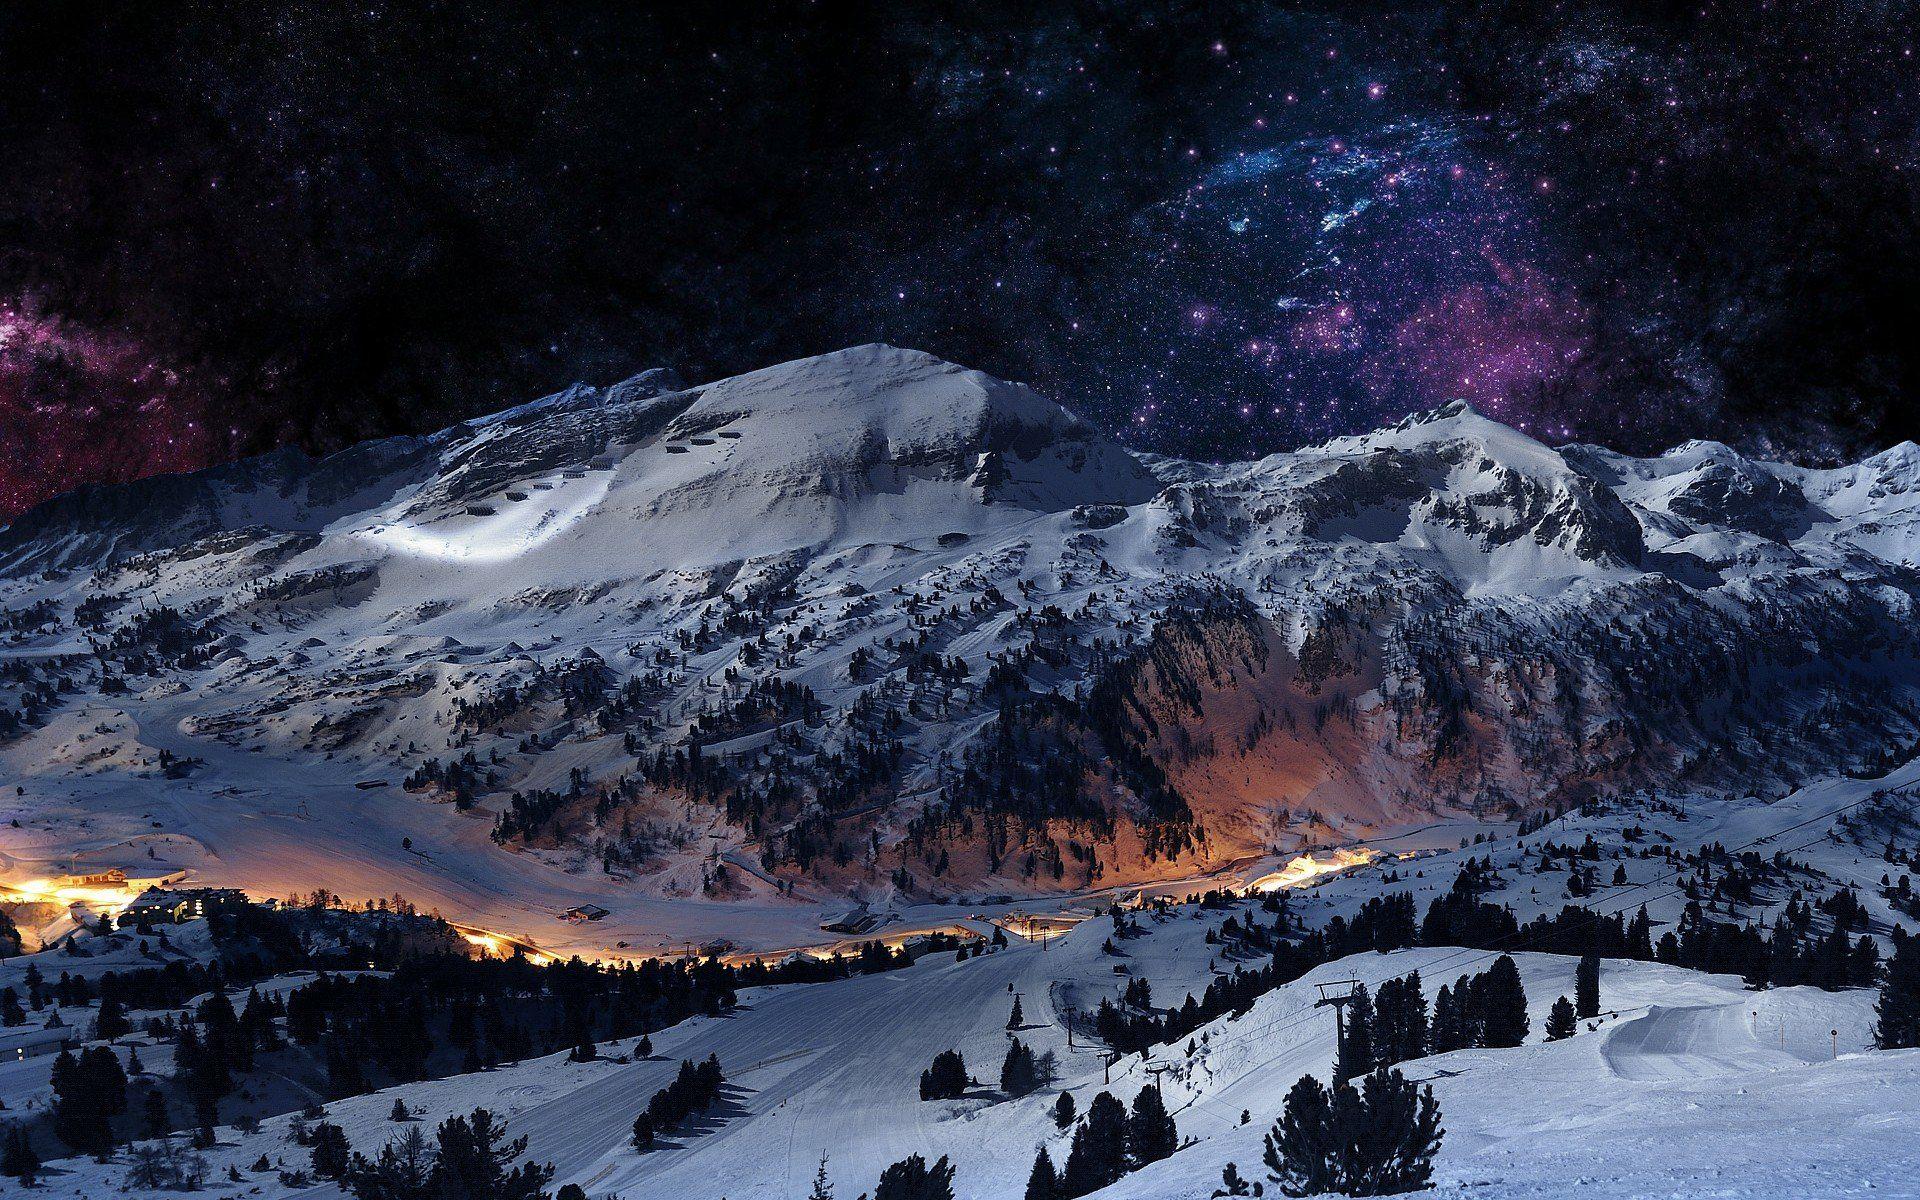 Night Mountain Wallpaper HD. Wallpaper, Background, Image, Art Photo. Winter wallpaper hd, Mountain wallpaper, Mountains